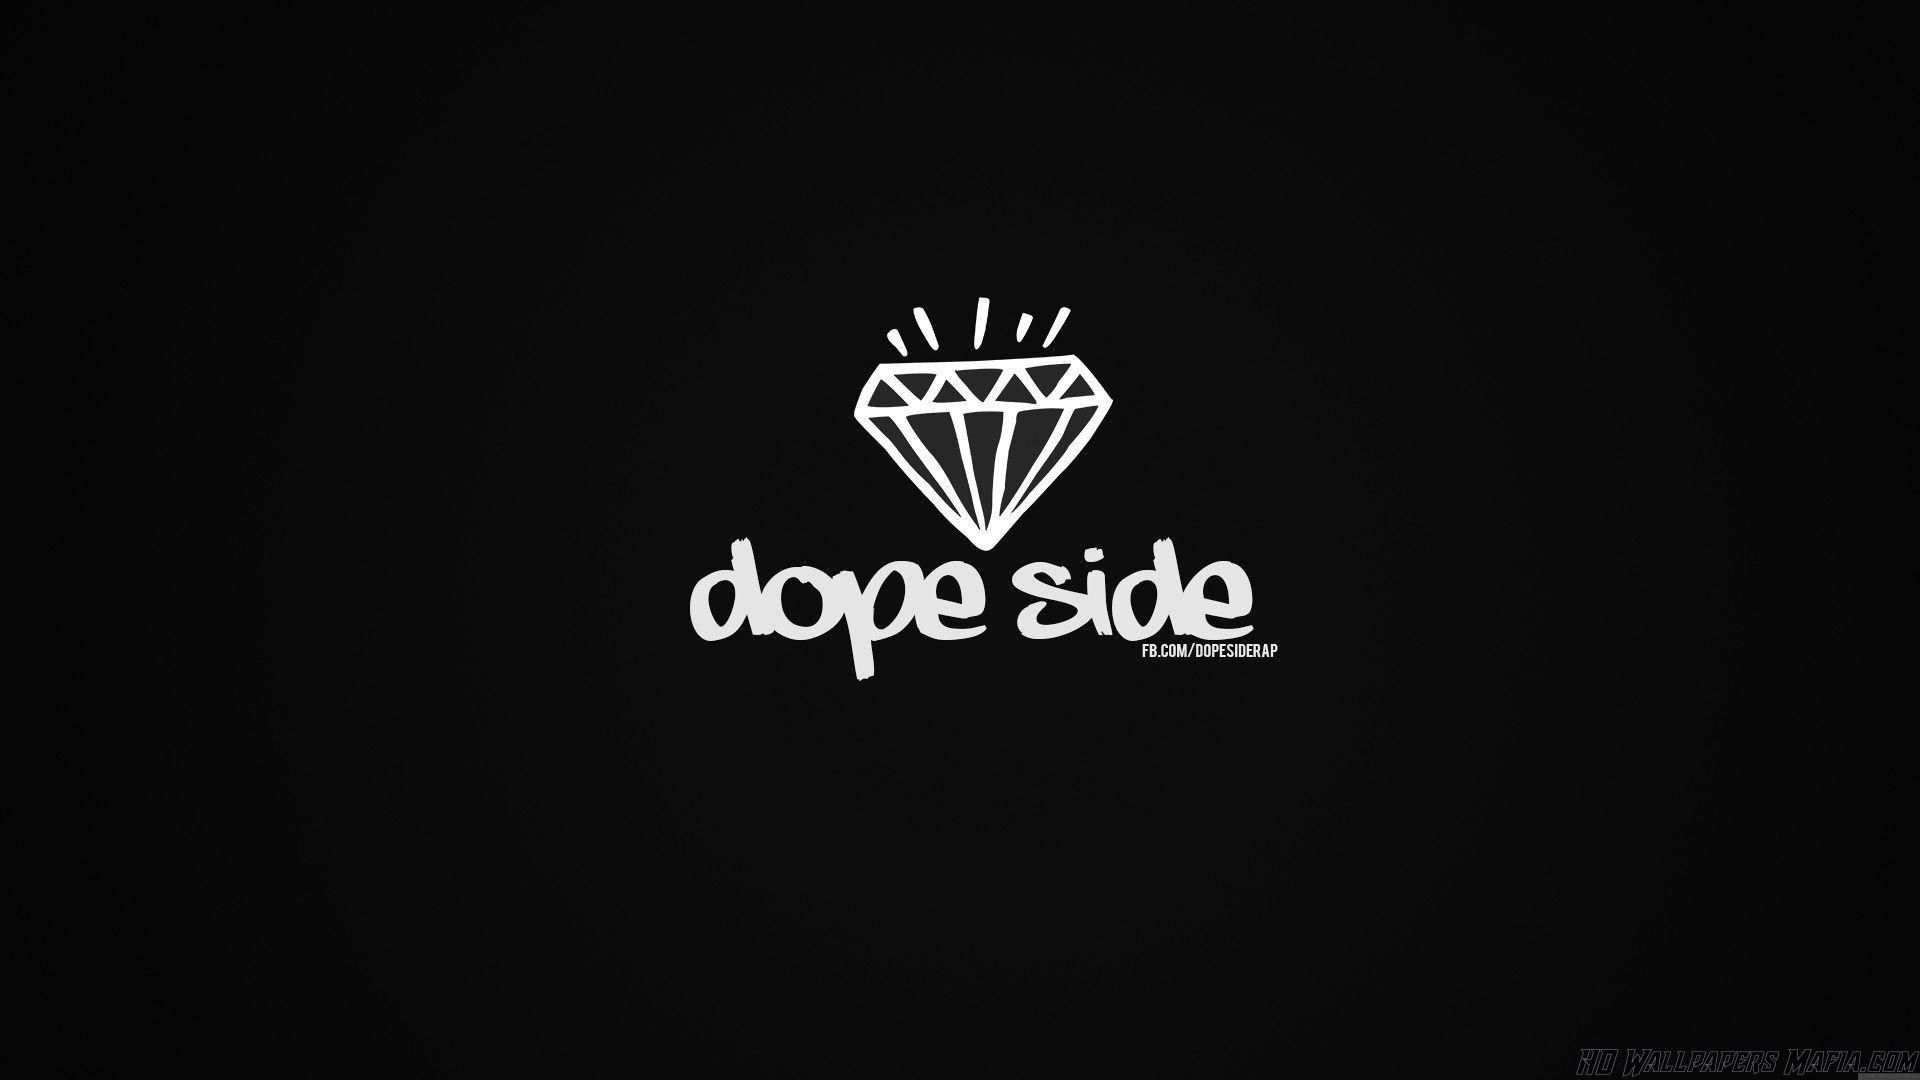 Most Dope Logo - Most Dope Logo | www.topsimages.com